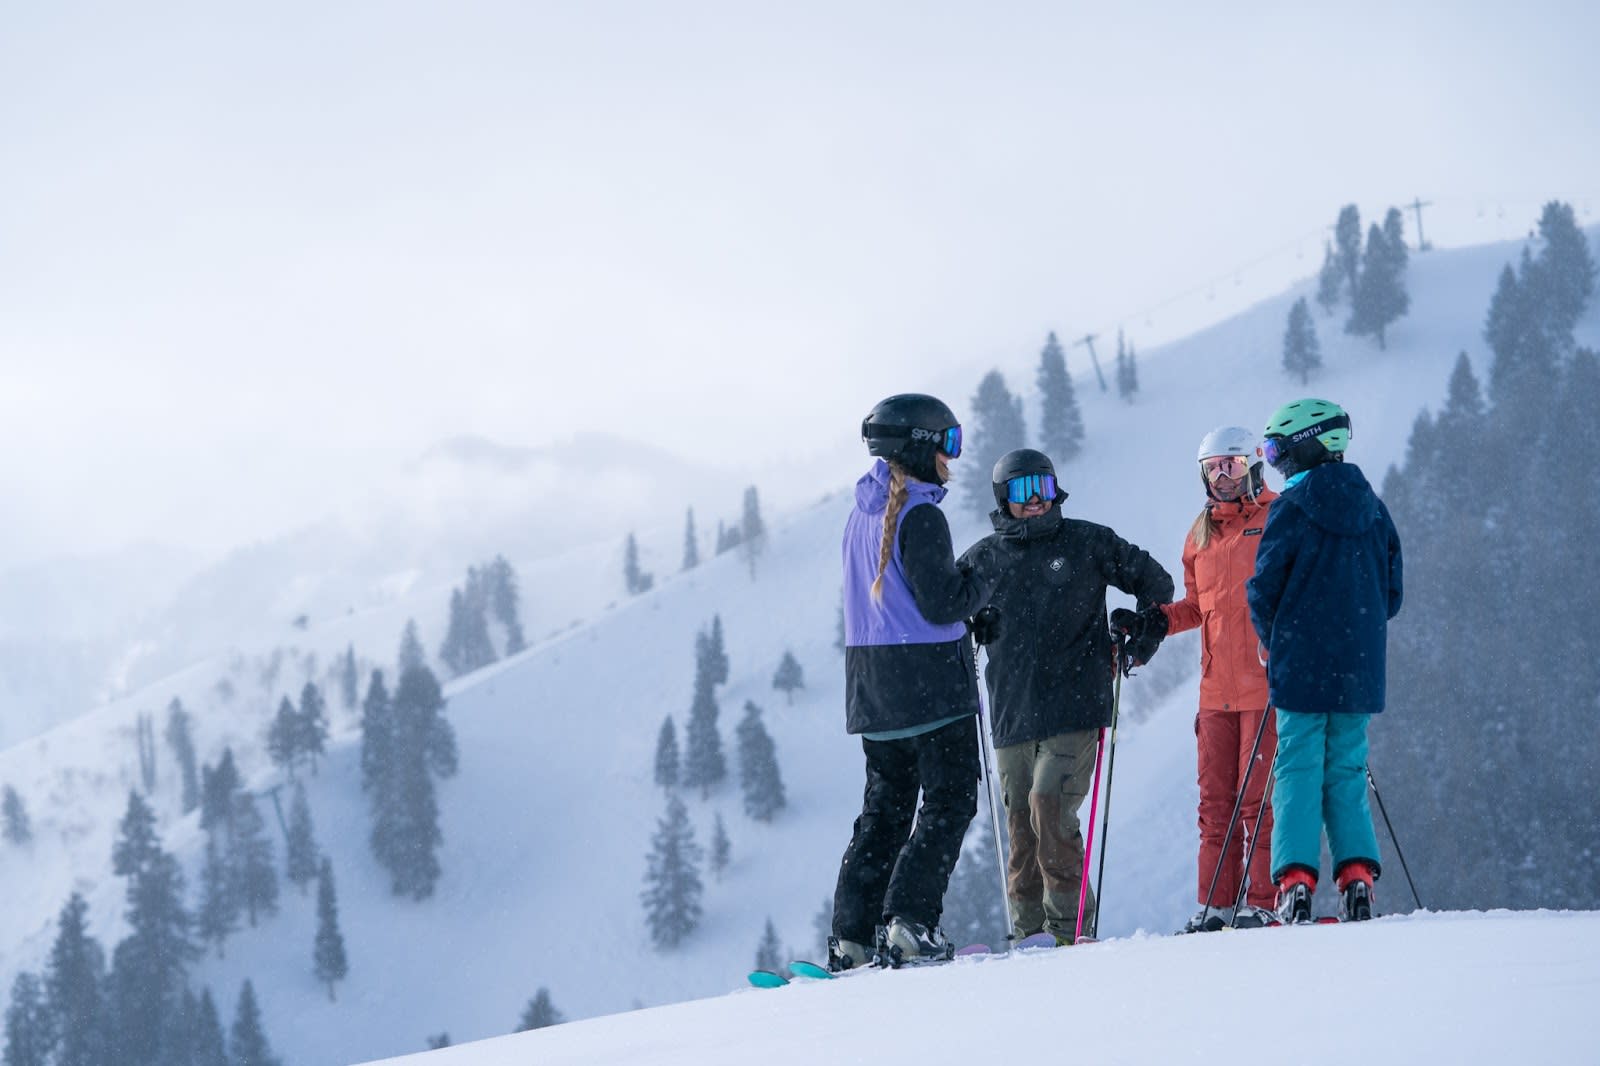 Sundance Skiiers